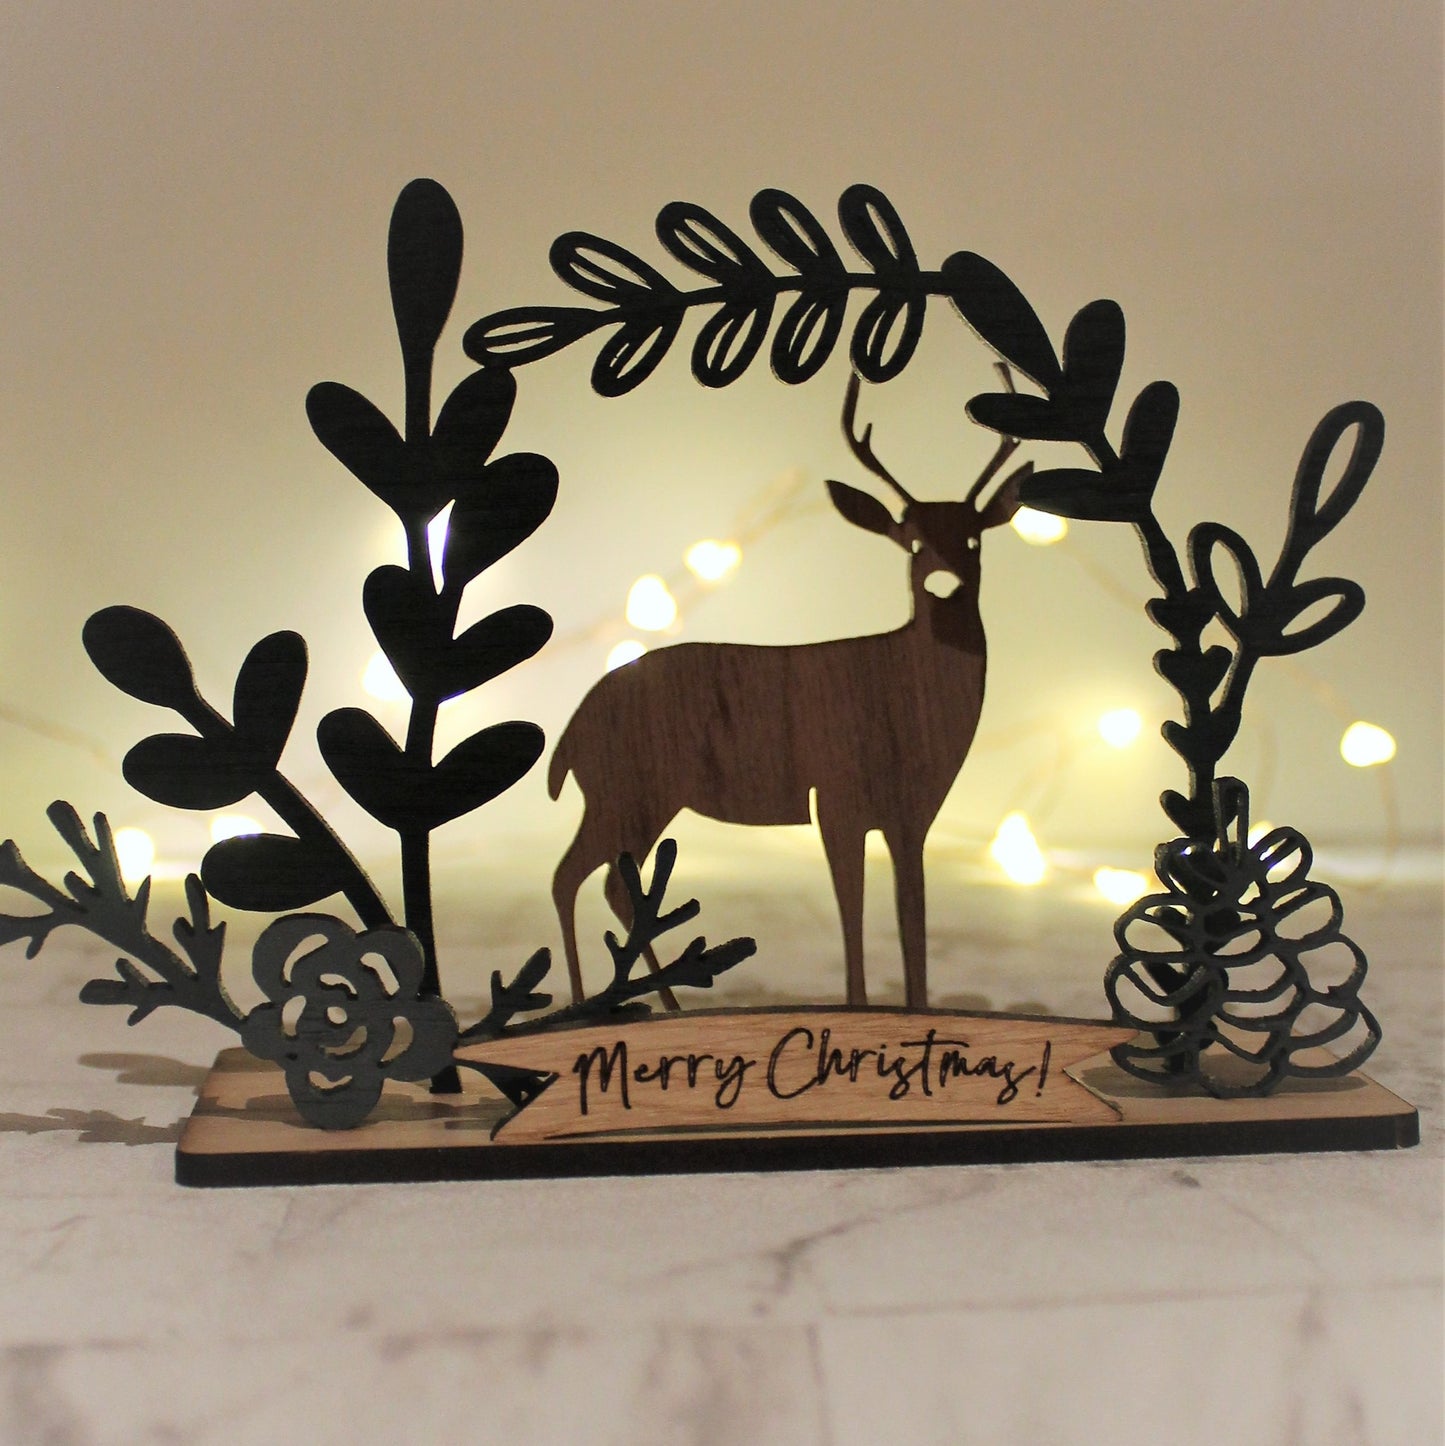 Silhouette of deer in wood, backlit wooden ornament